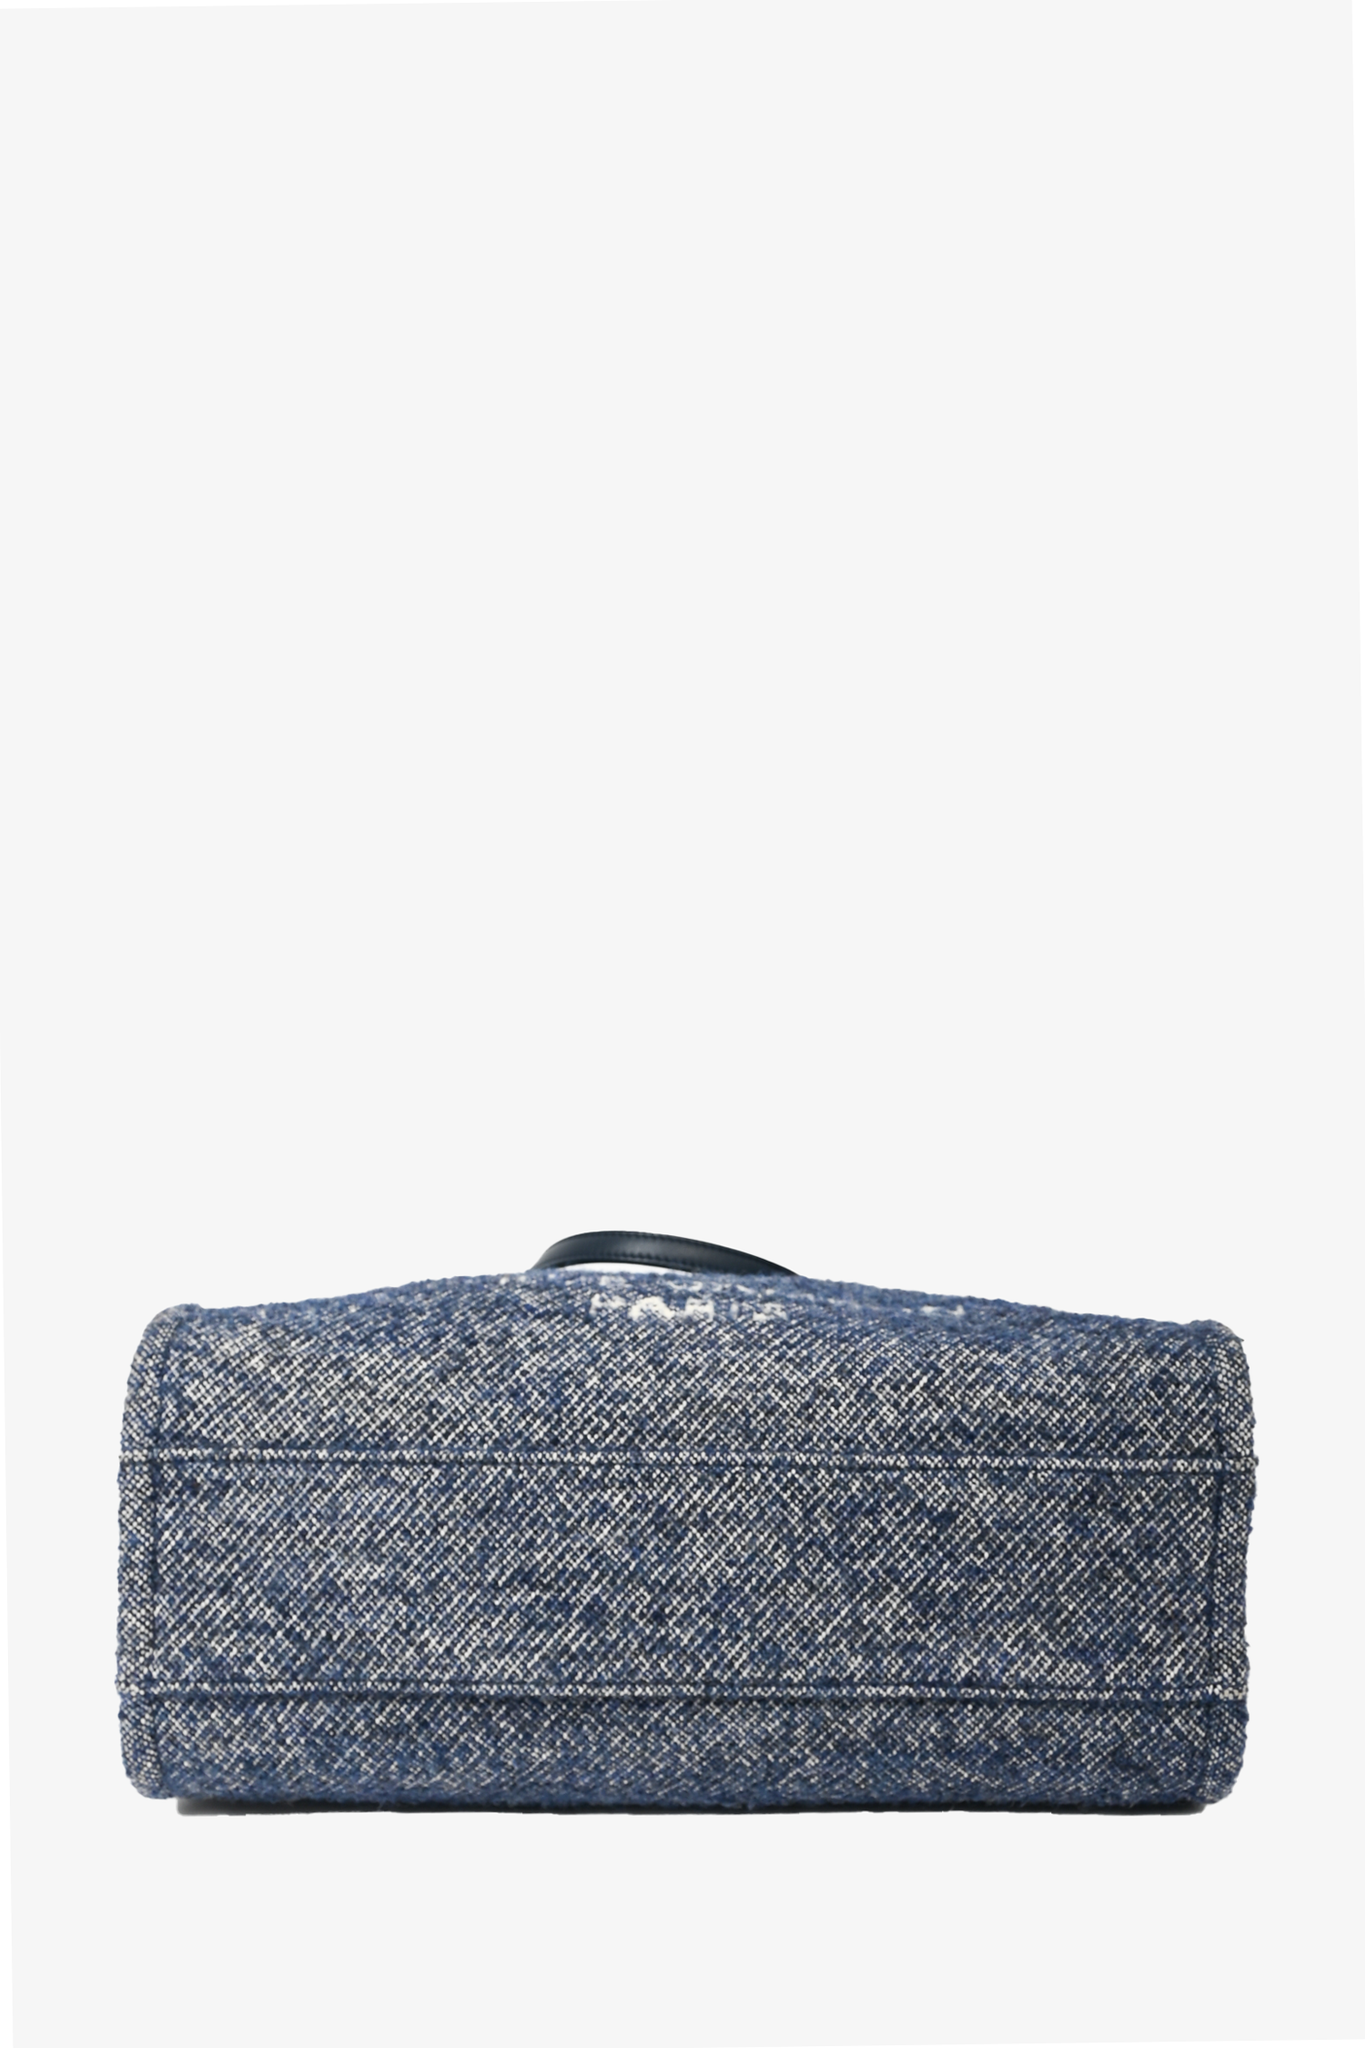 Chanel Blue/White Canvas 31 Rue Cambon Medium Deauville Shoulder Tote Bag